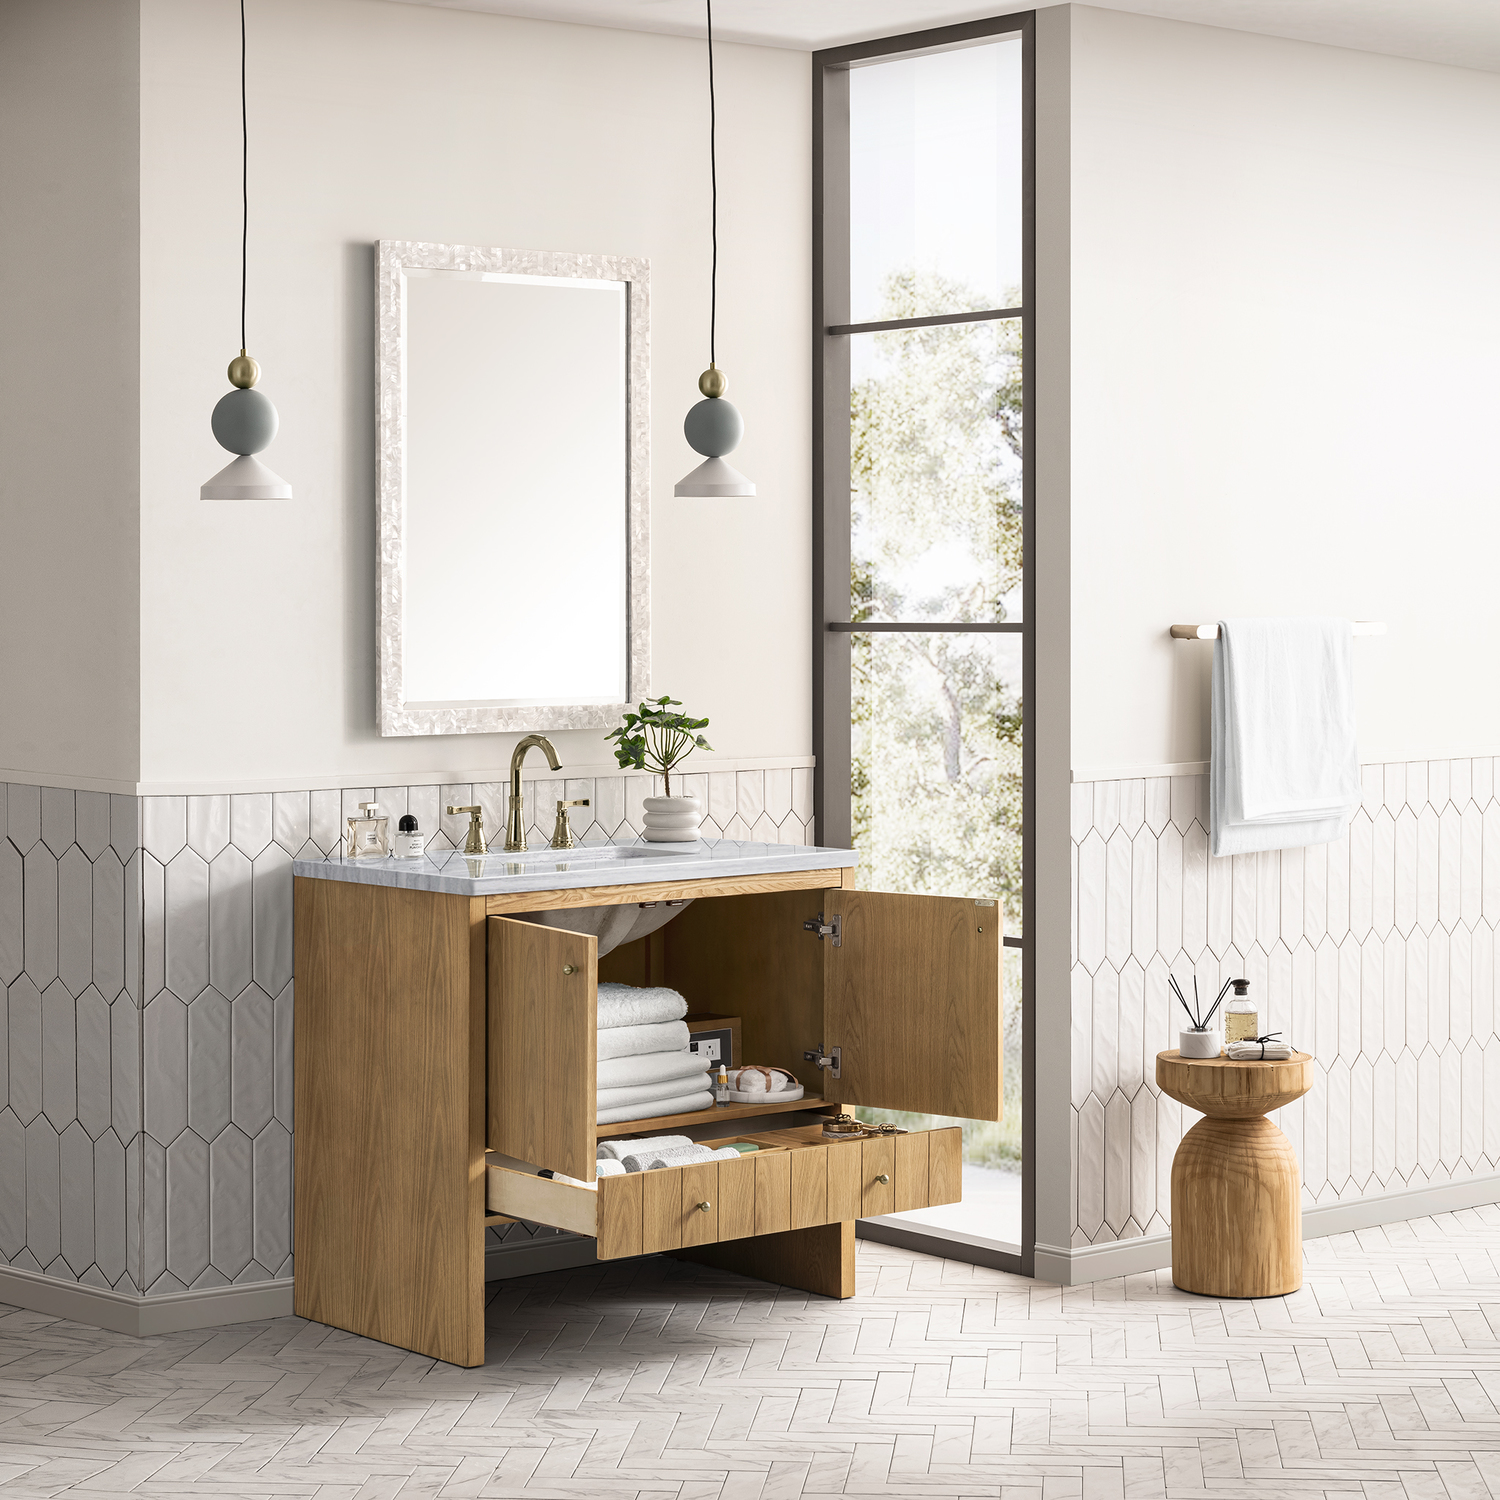 bathroom cabinets suppliers James Martin Vanity Light Natural Oak Contemporary/Modern, Modern Farmhouse.Transitional